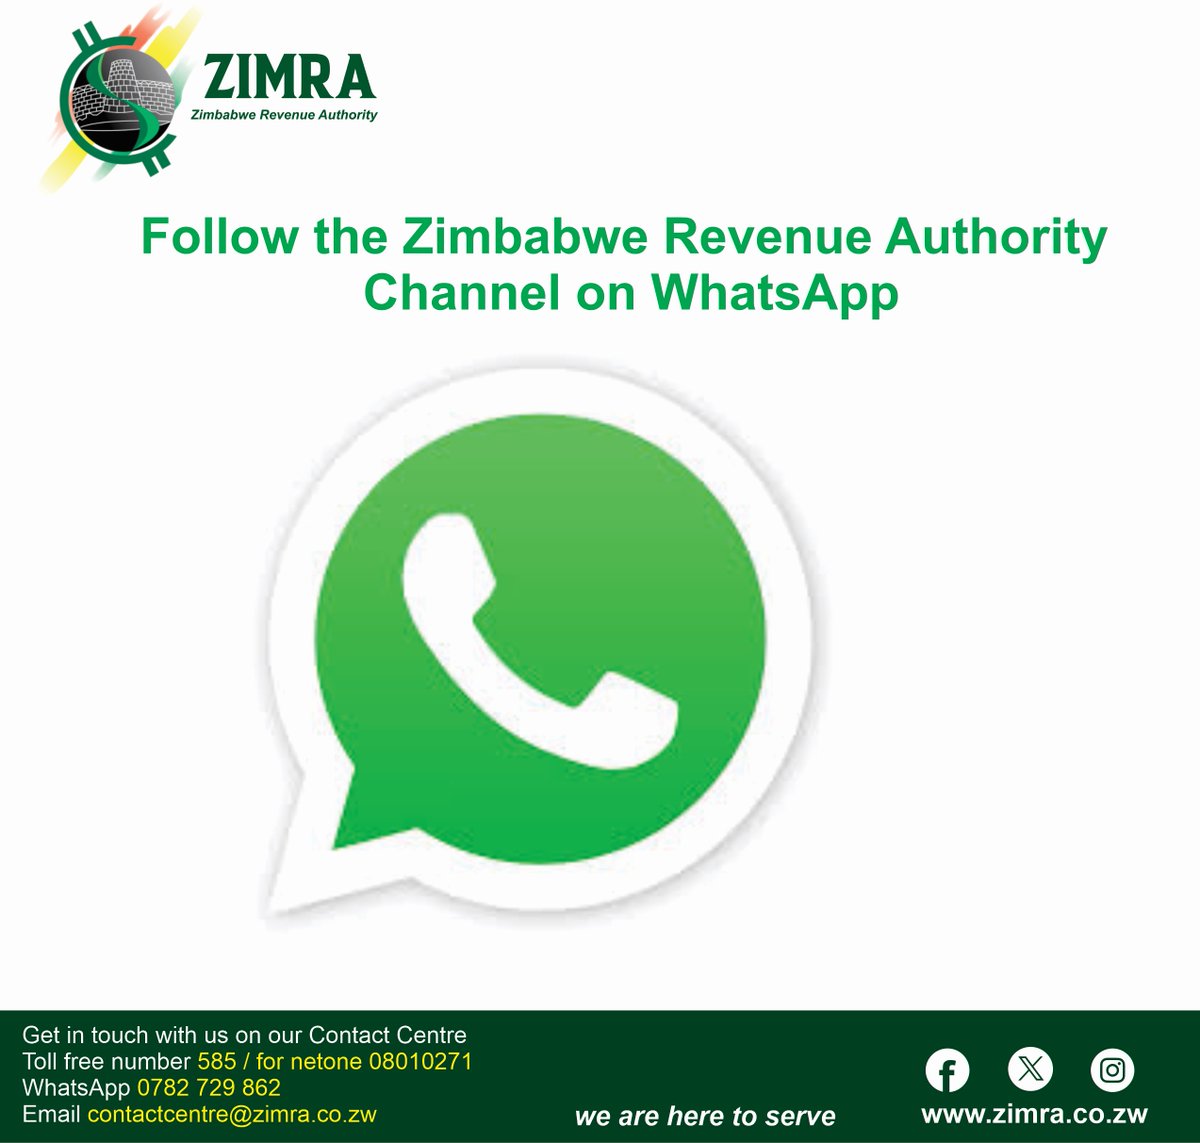 Follow the Zimbabwe Revenue Authority Channel channel on WhatsApp for updates : whatsapp.com/channel/0029Va…